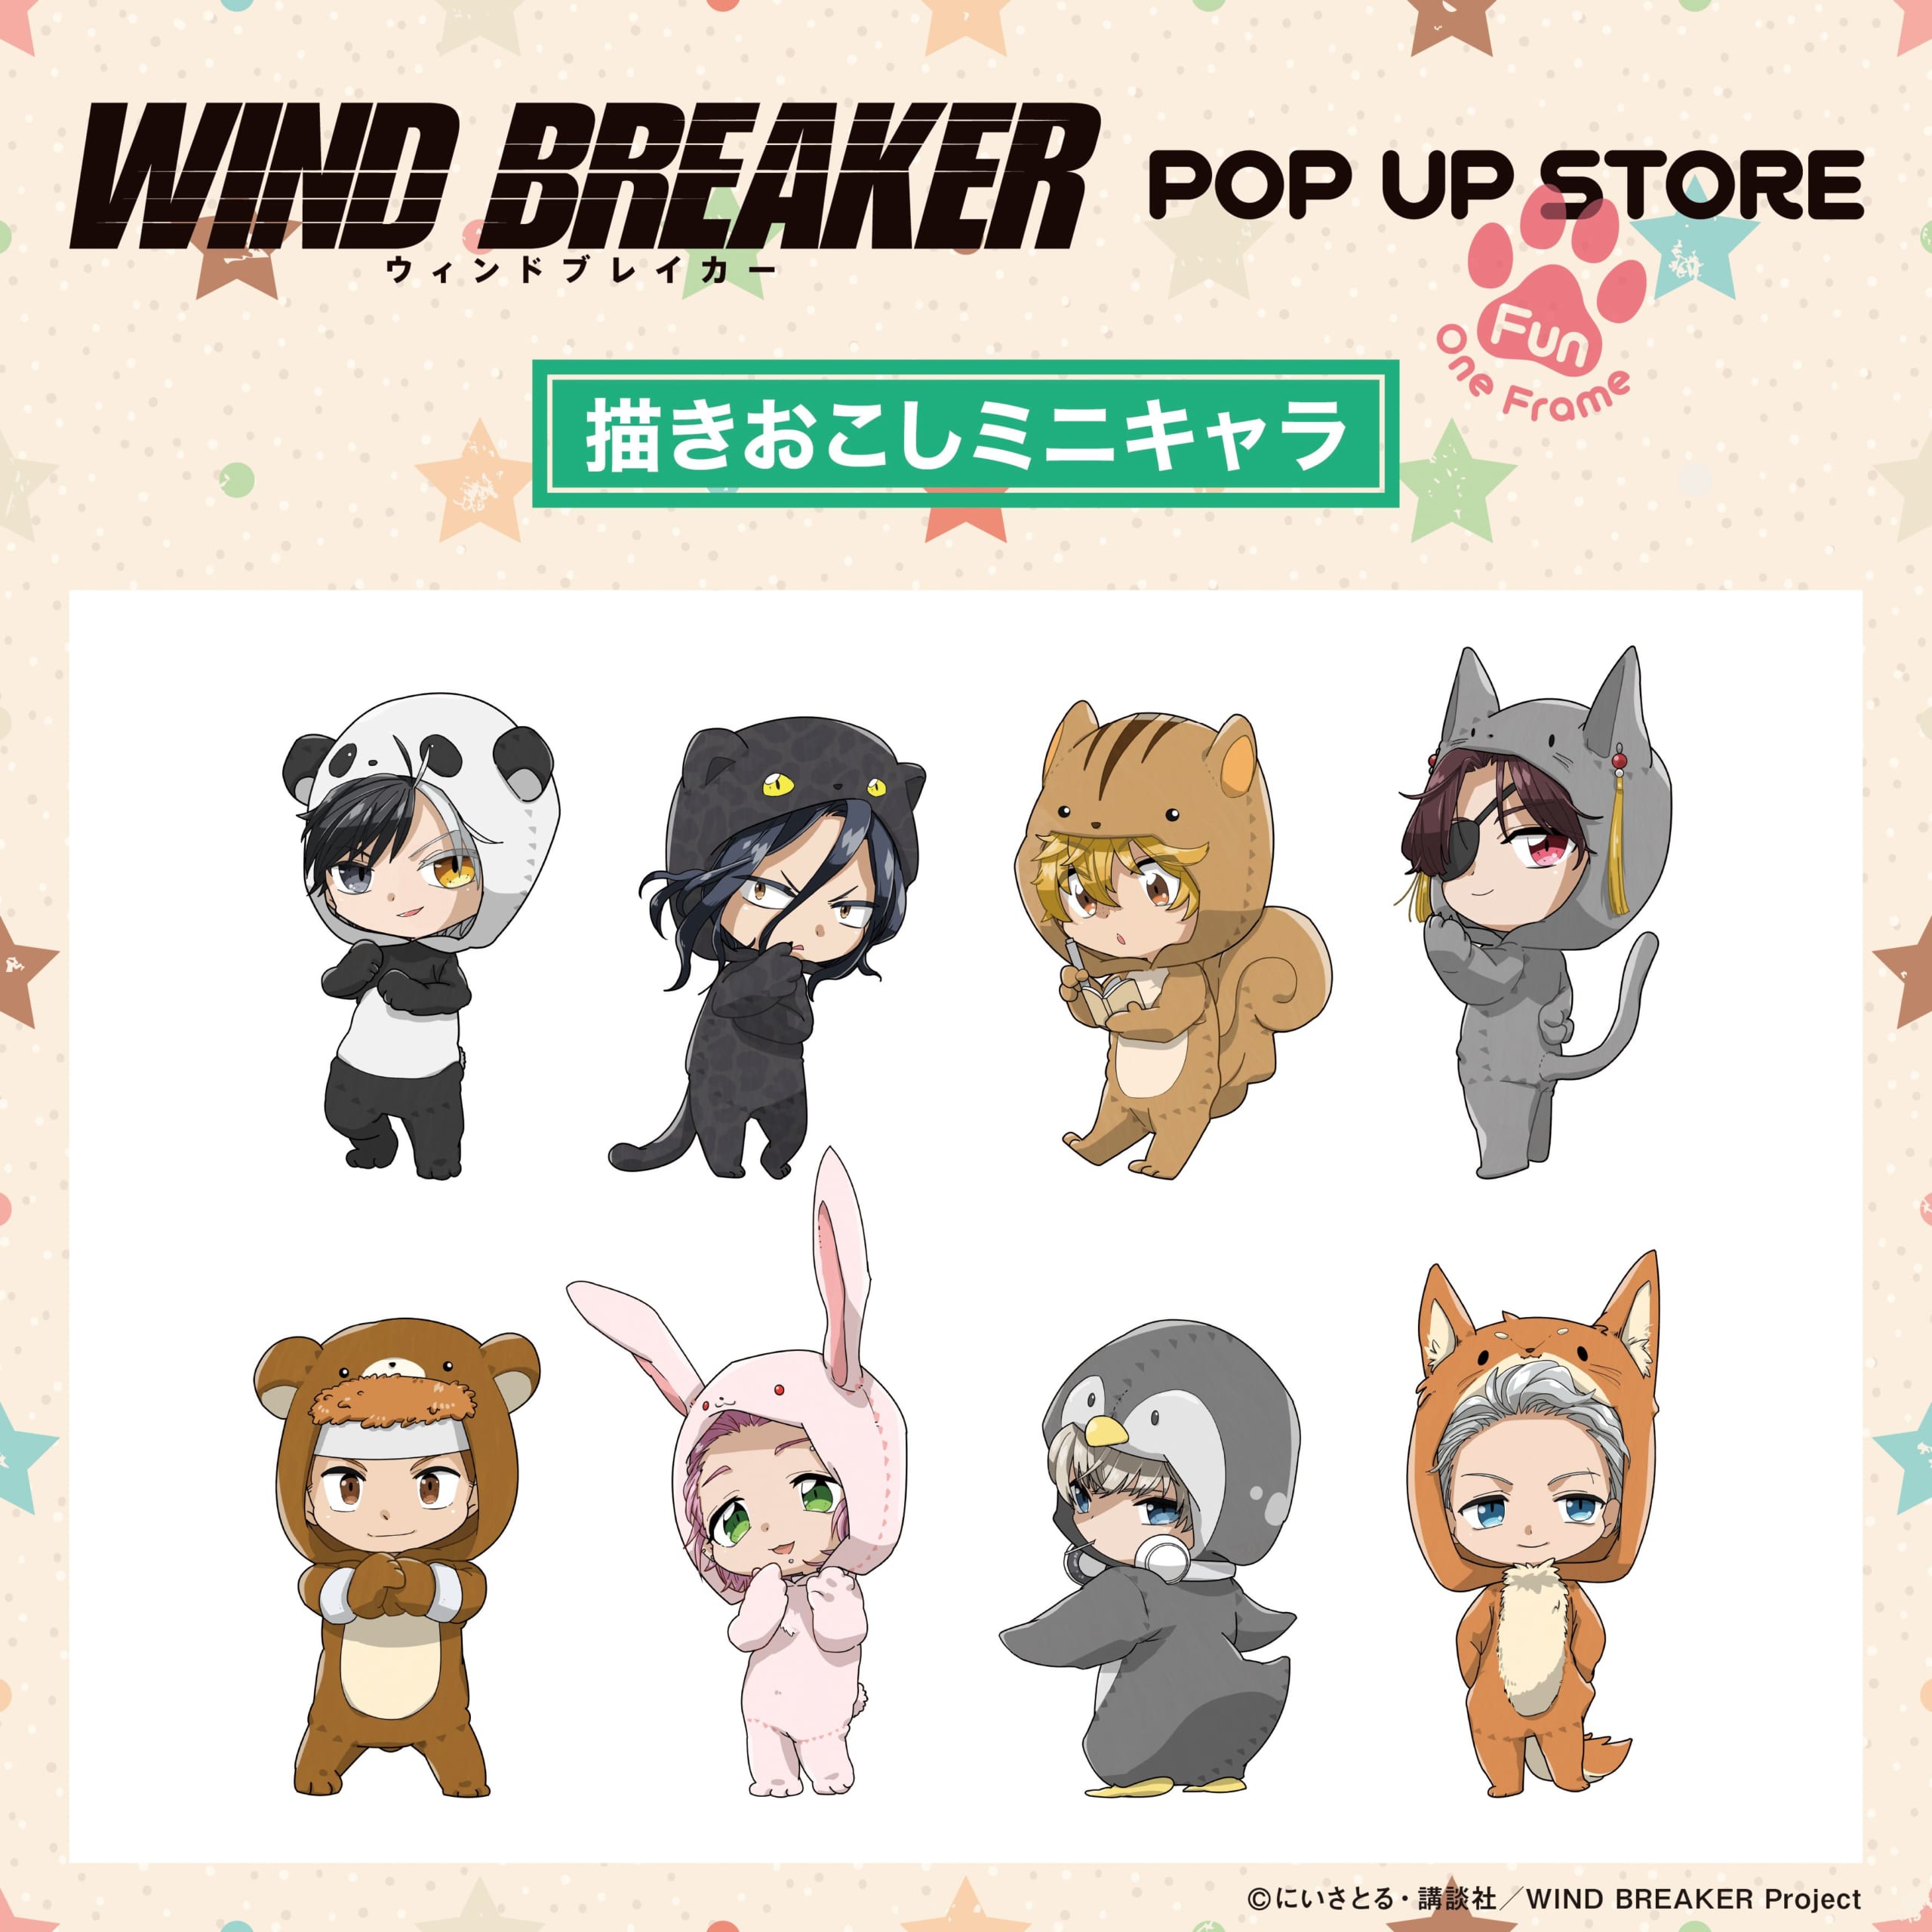 TVアニメ「WIND BREAKER」期間限定POP UP STORE in ロフト 描きおこしミニキャラ